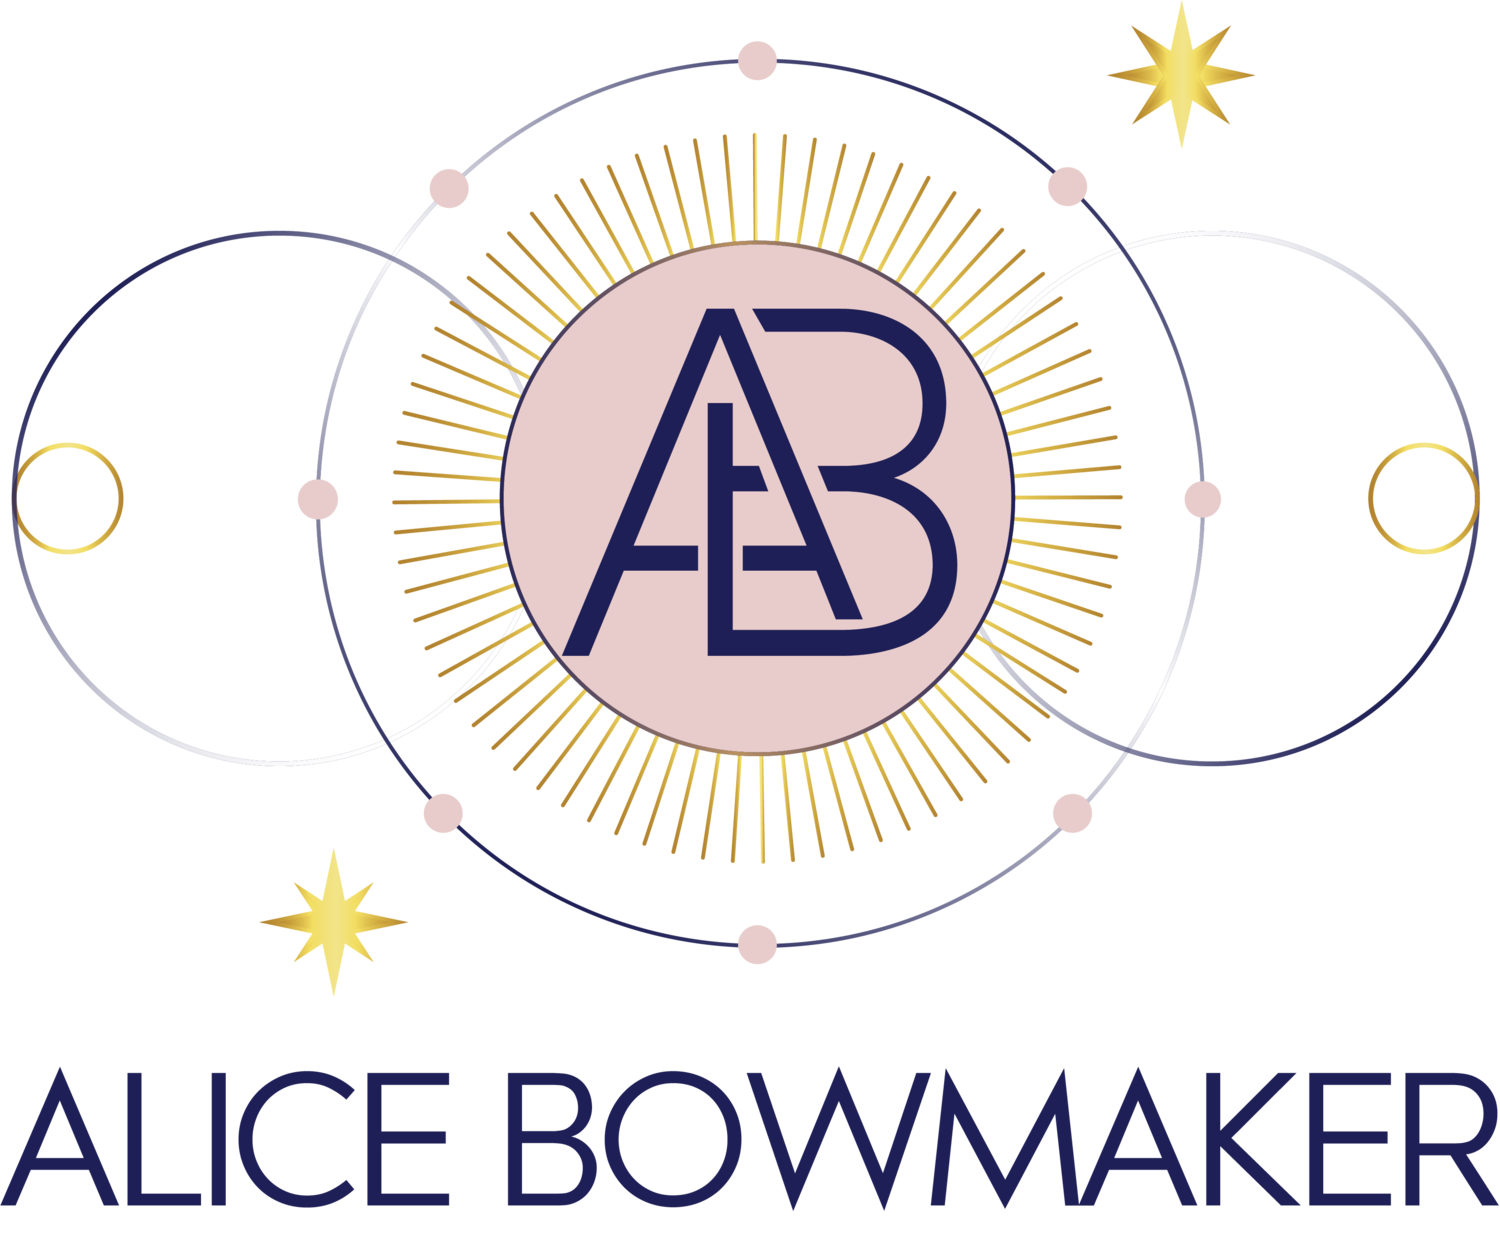 Alice Bowmaker